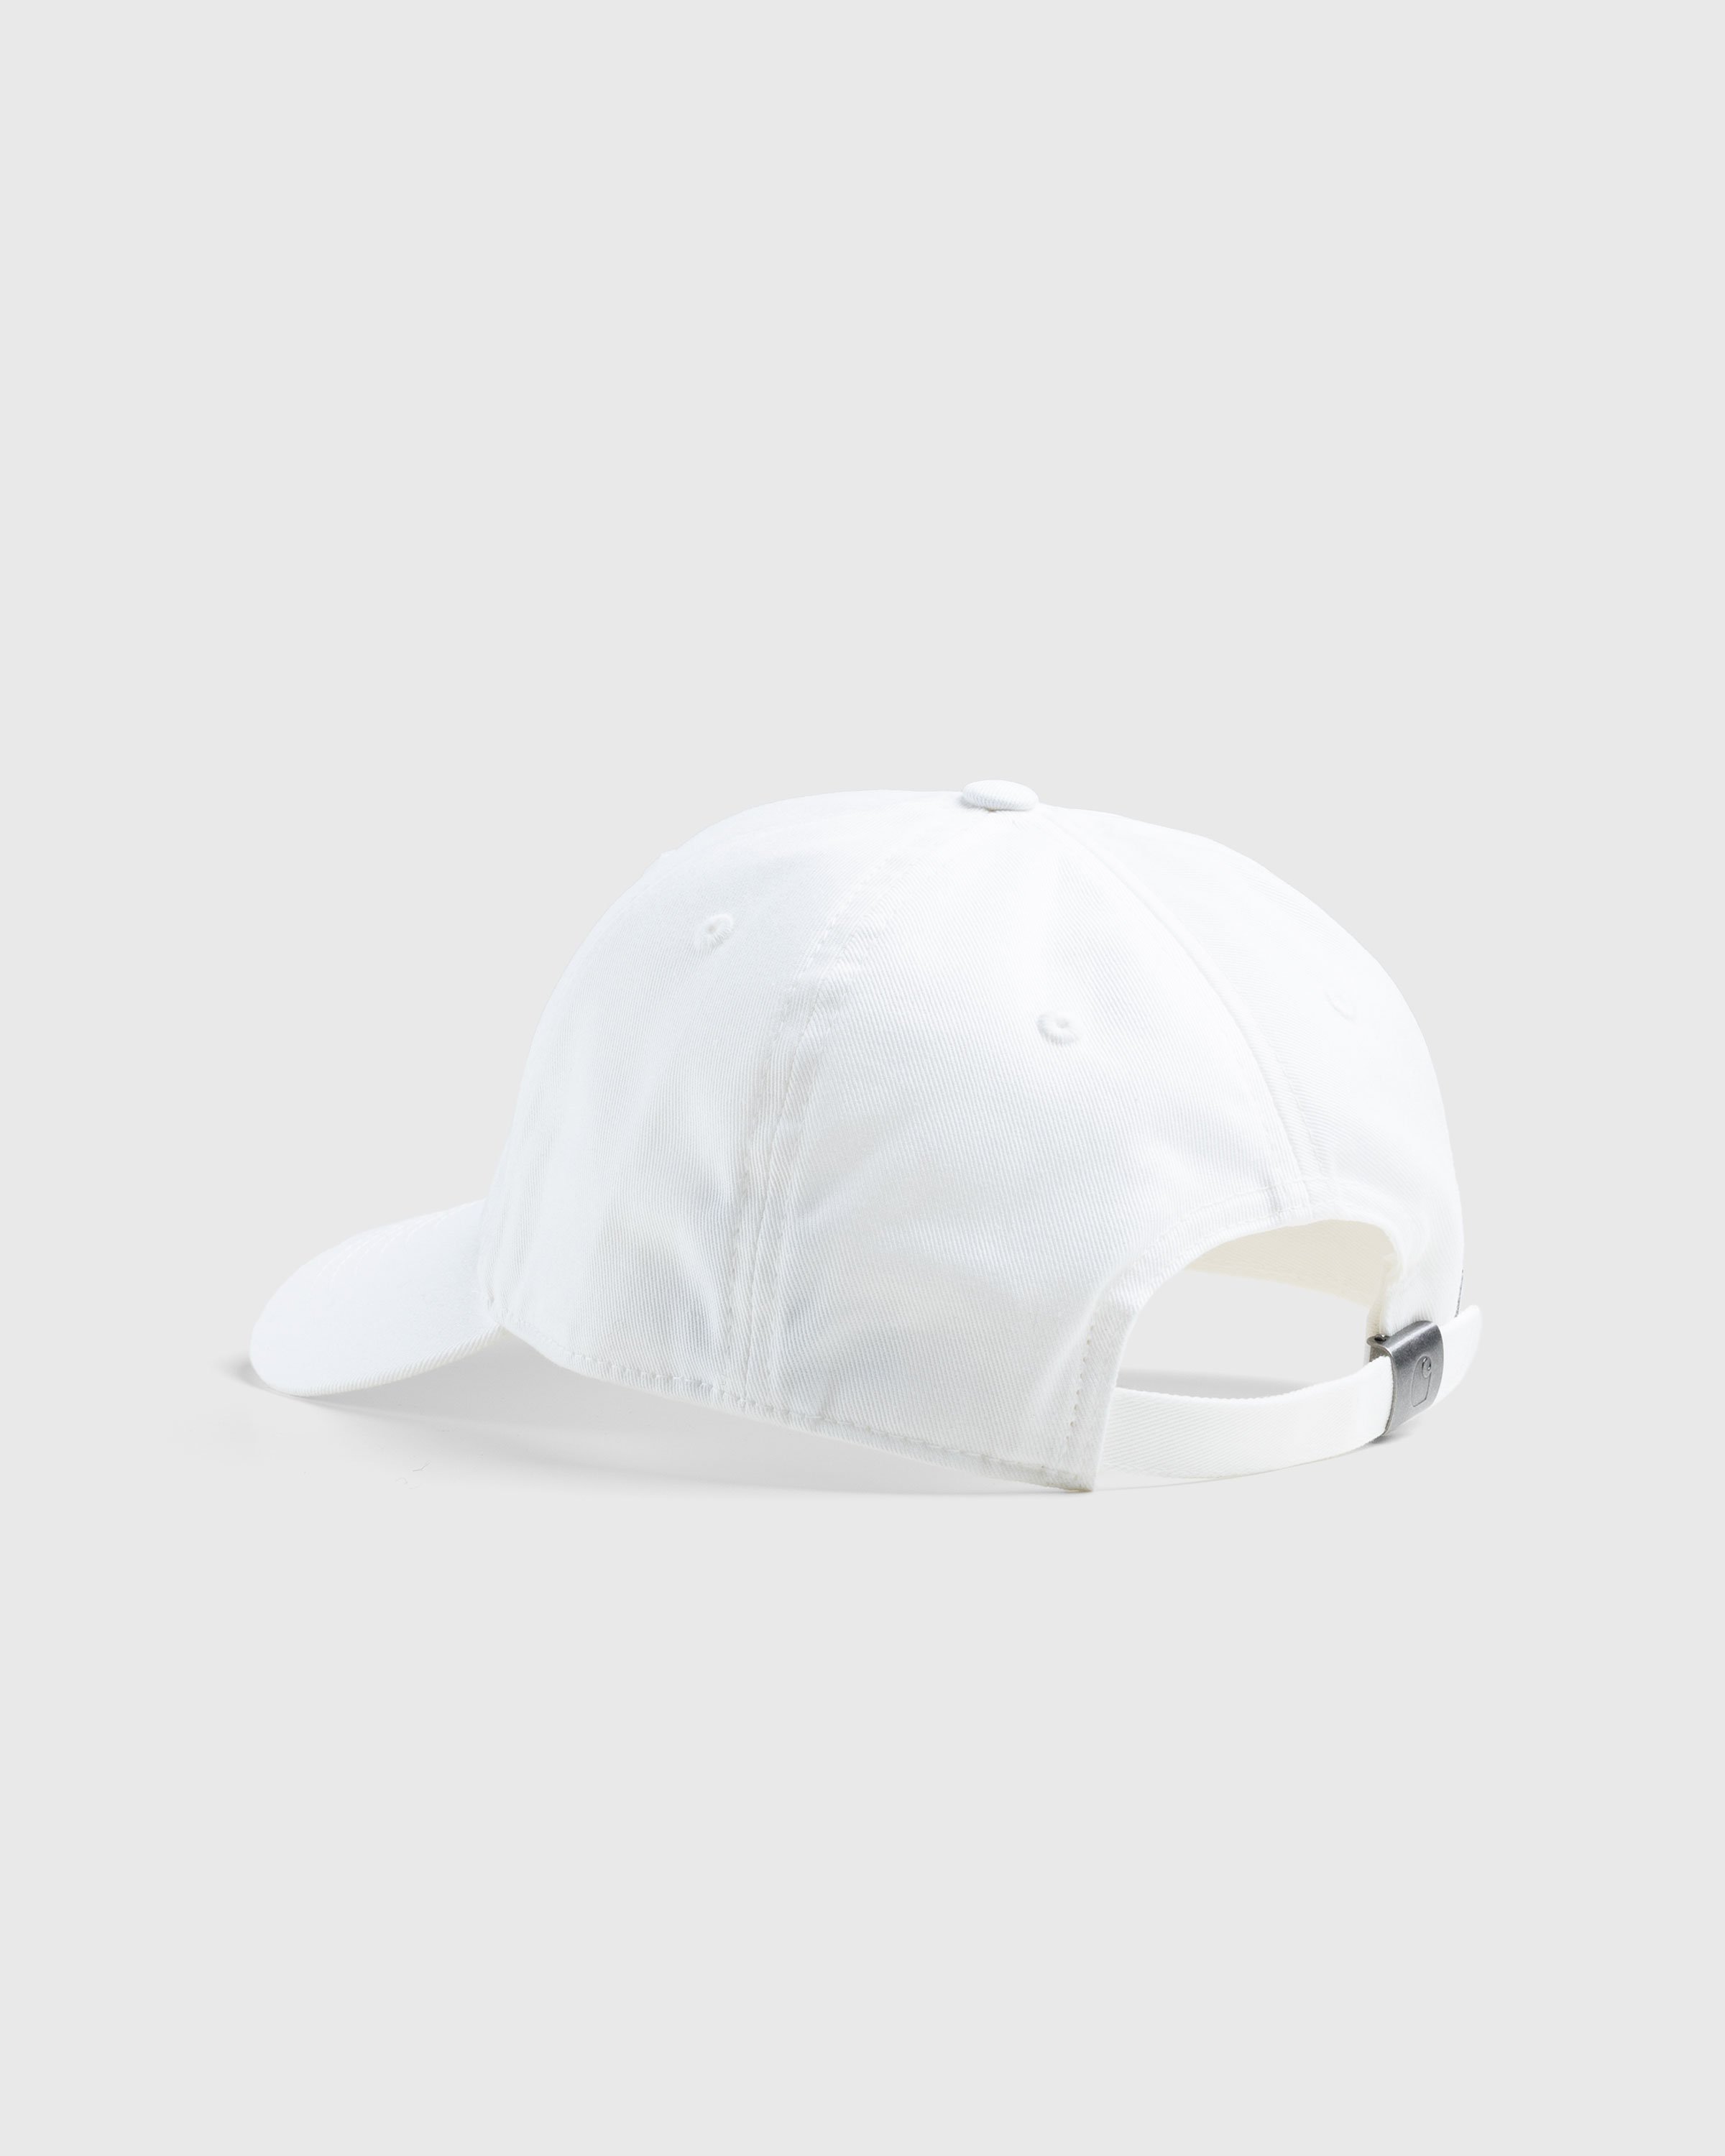 Carhartt WIP - Blush Cap White - Accessories - White - Image 3